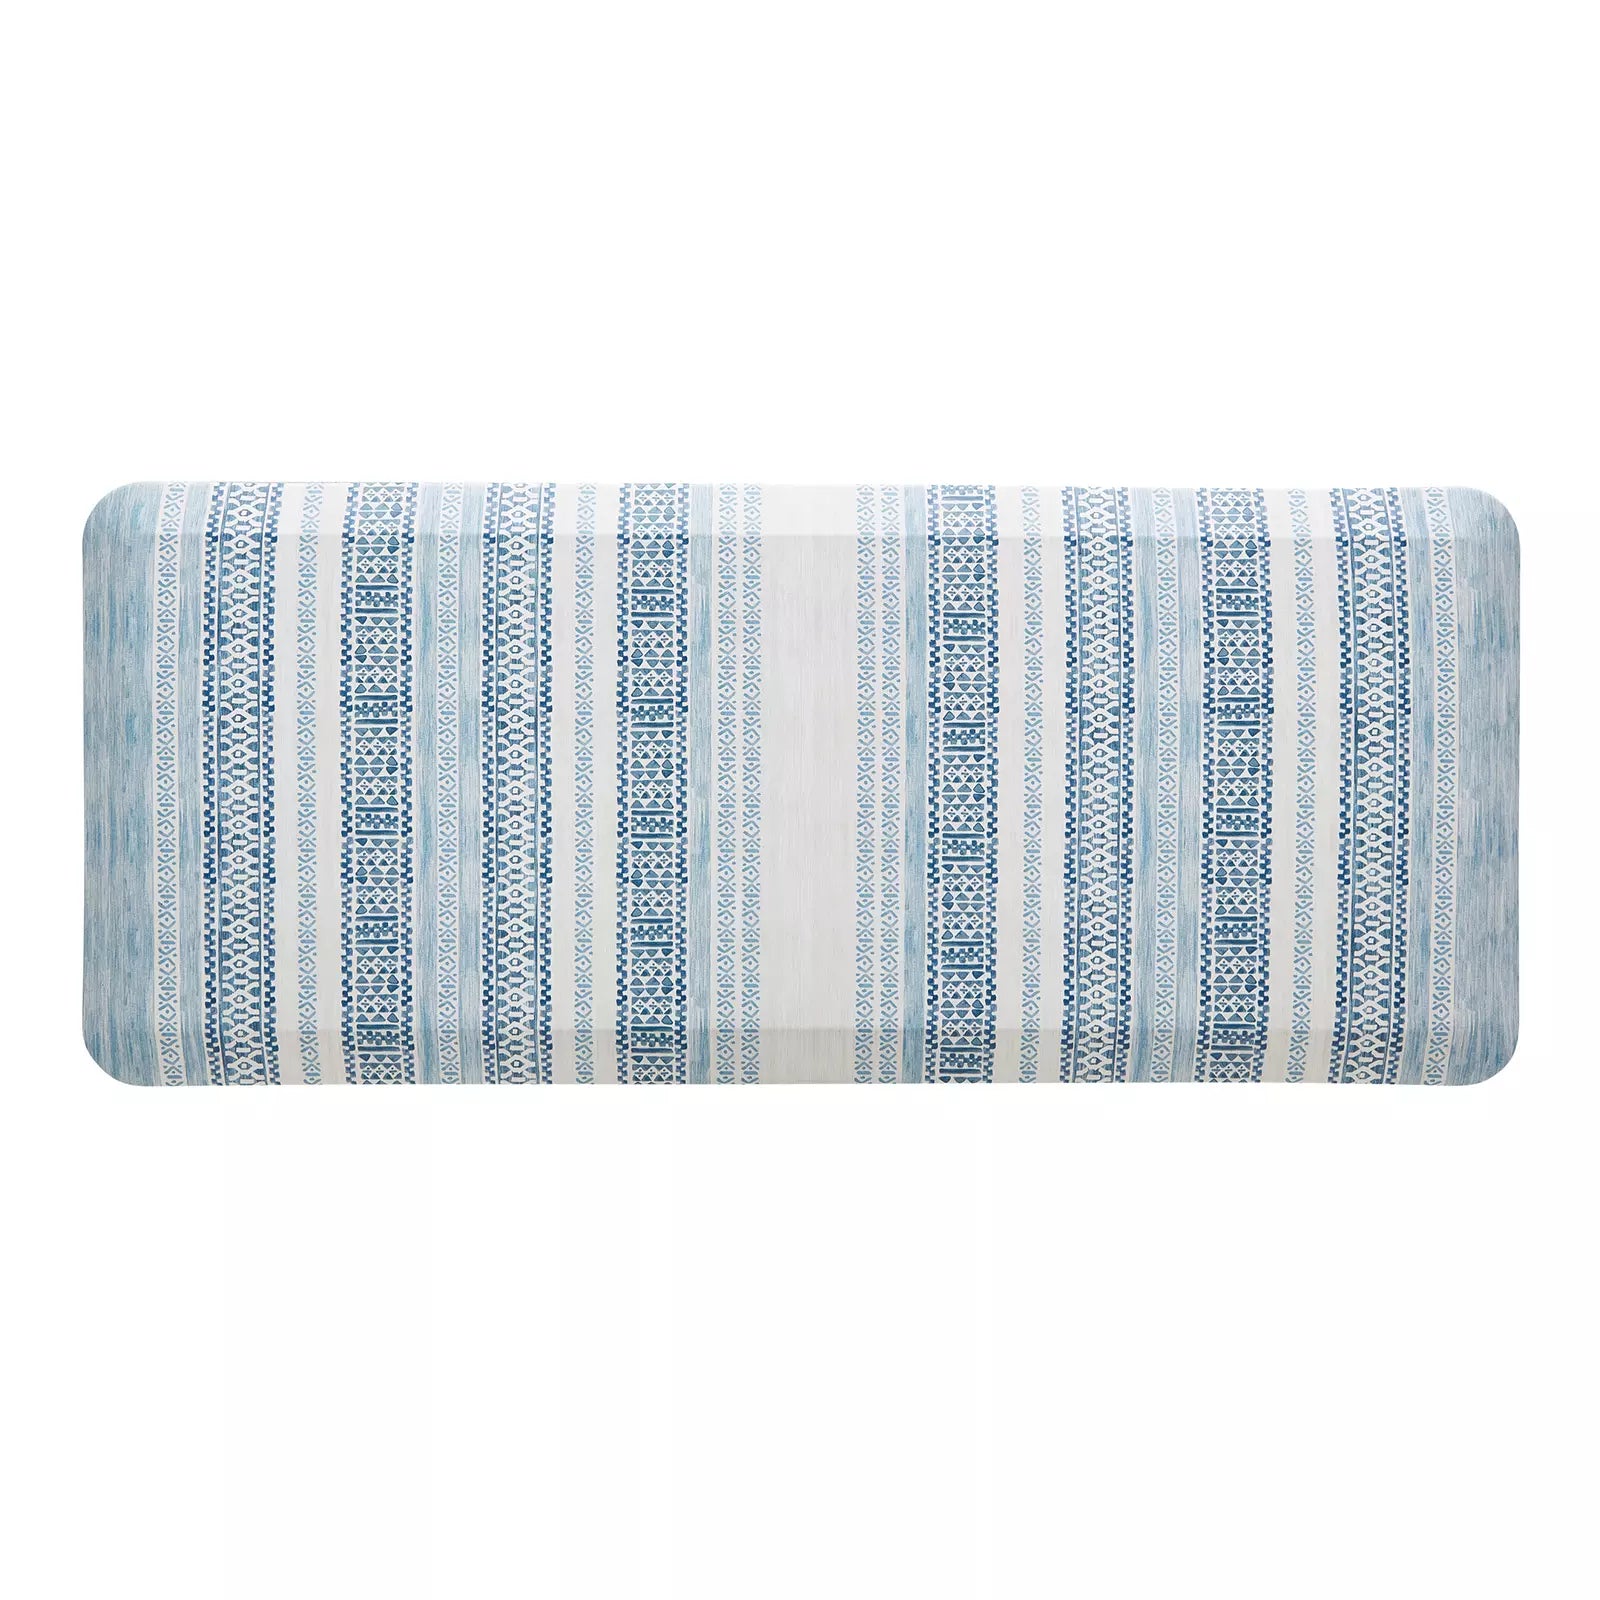 Blue and white boho stripe kitchen mat in size 20x48